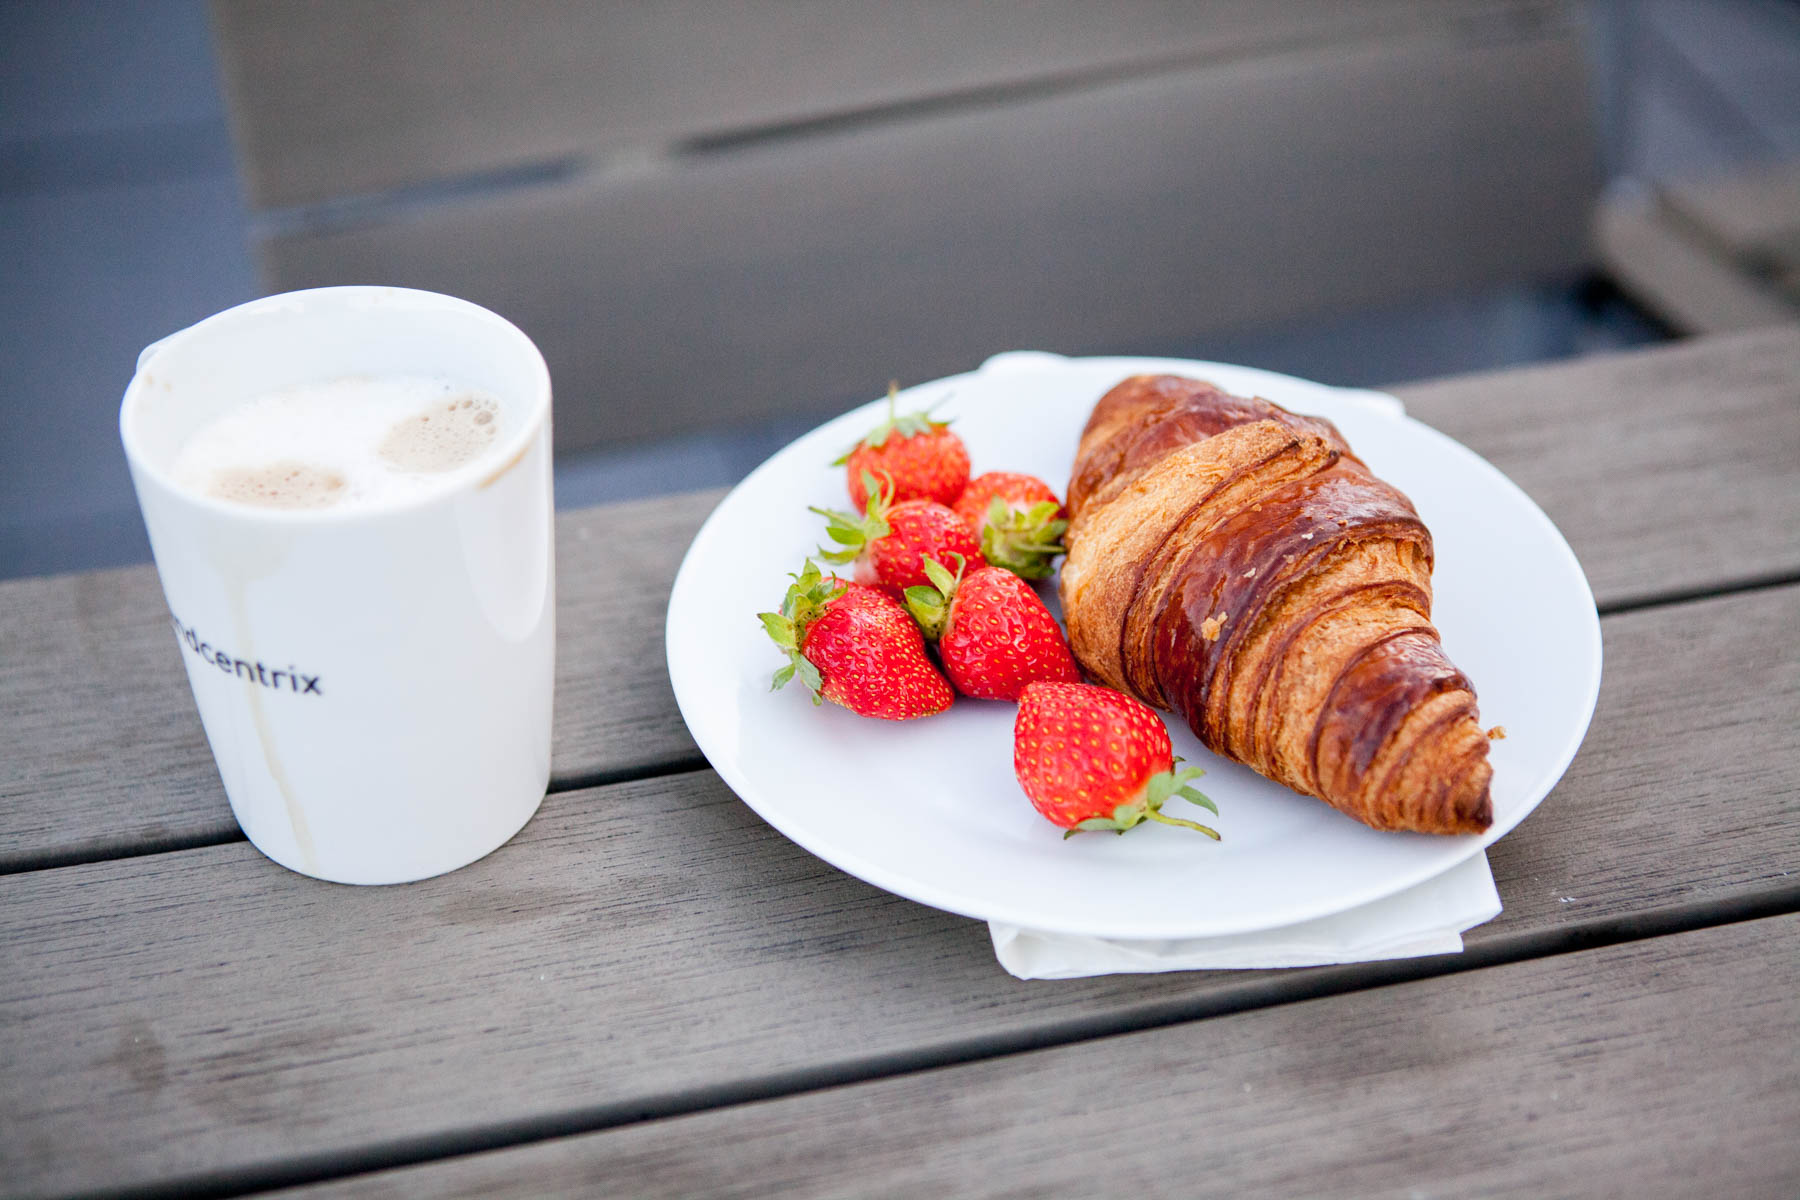 creative mornings köln vortrag frühstück grandceantrix Michaela Berghaus Veronica Garcia kaffee erdbeeren croissant jörn strojny